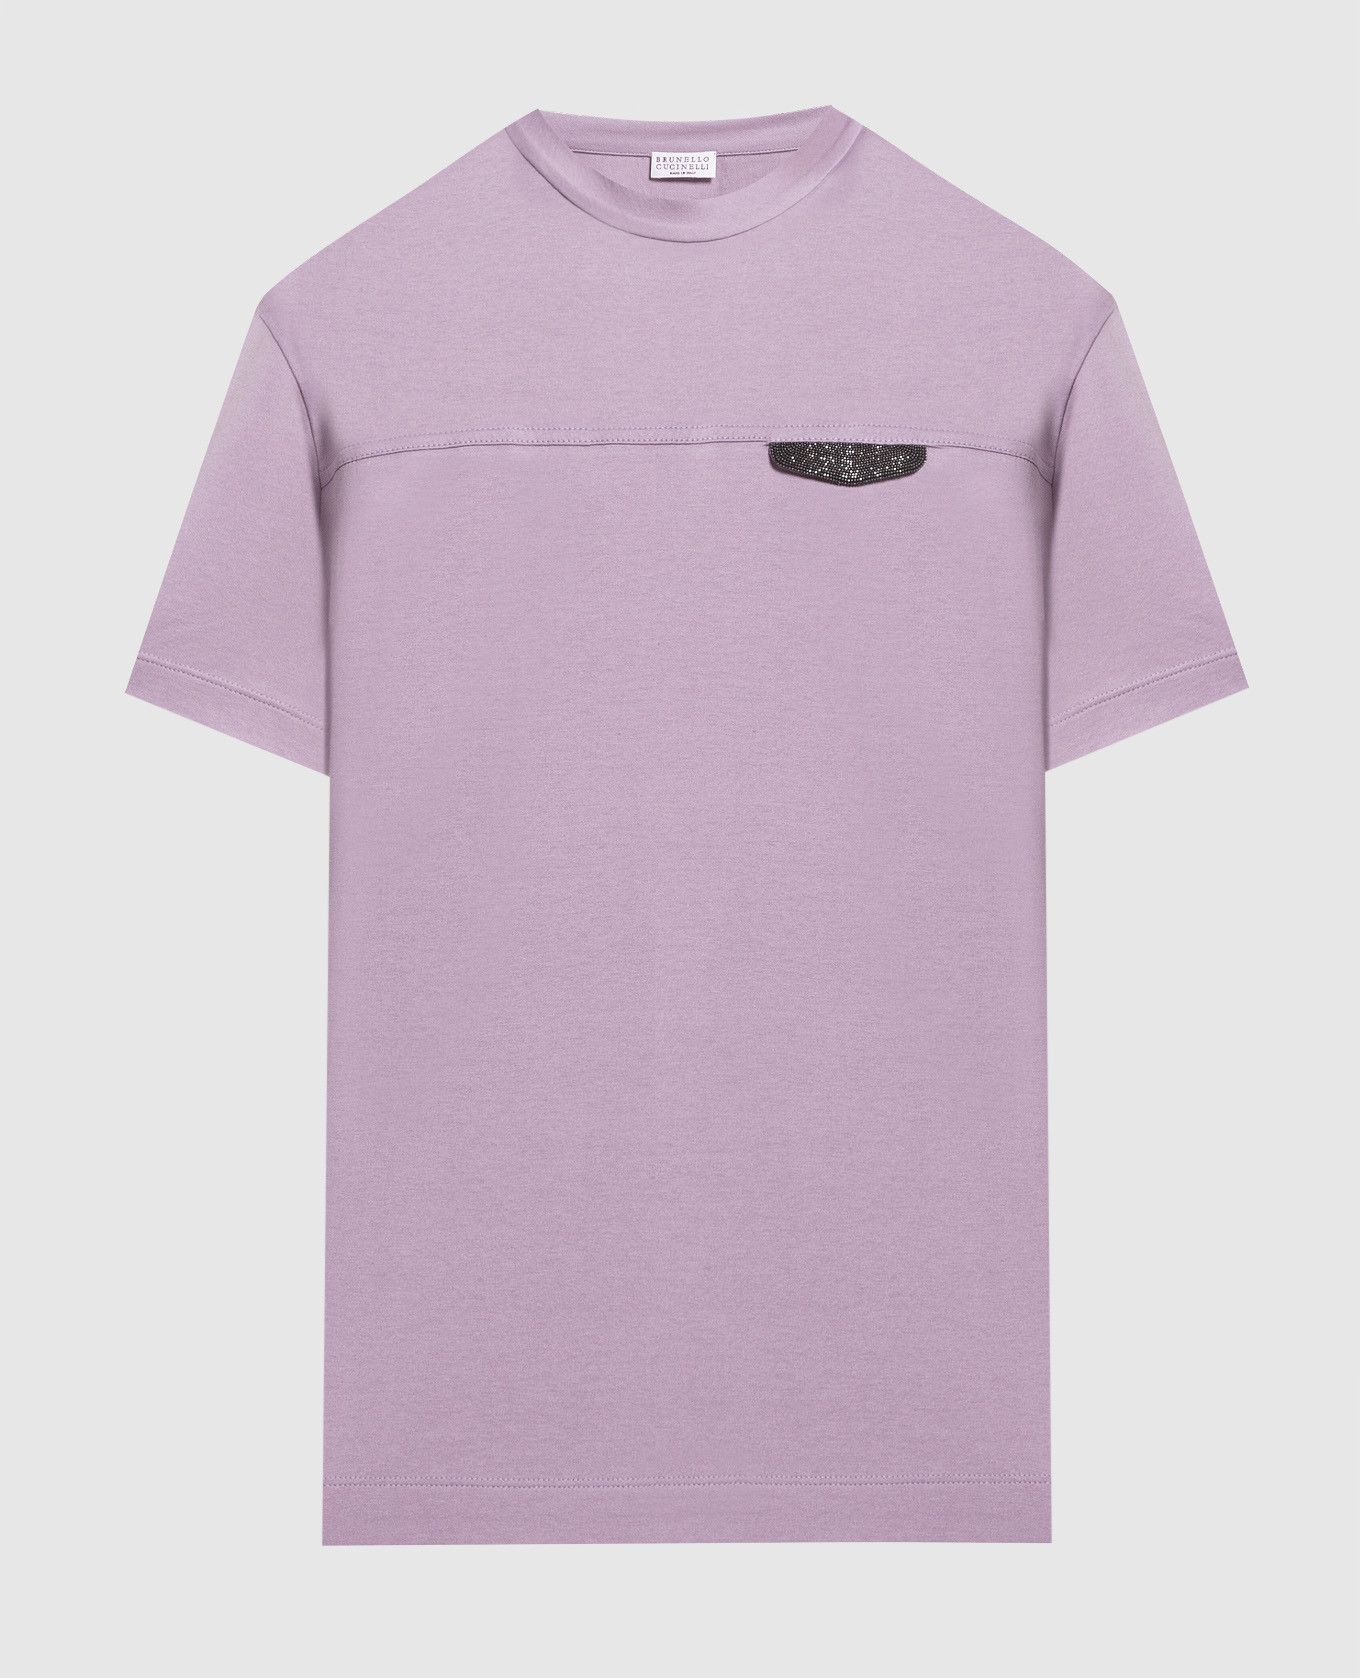 Purple t-shirt with monil chain